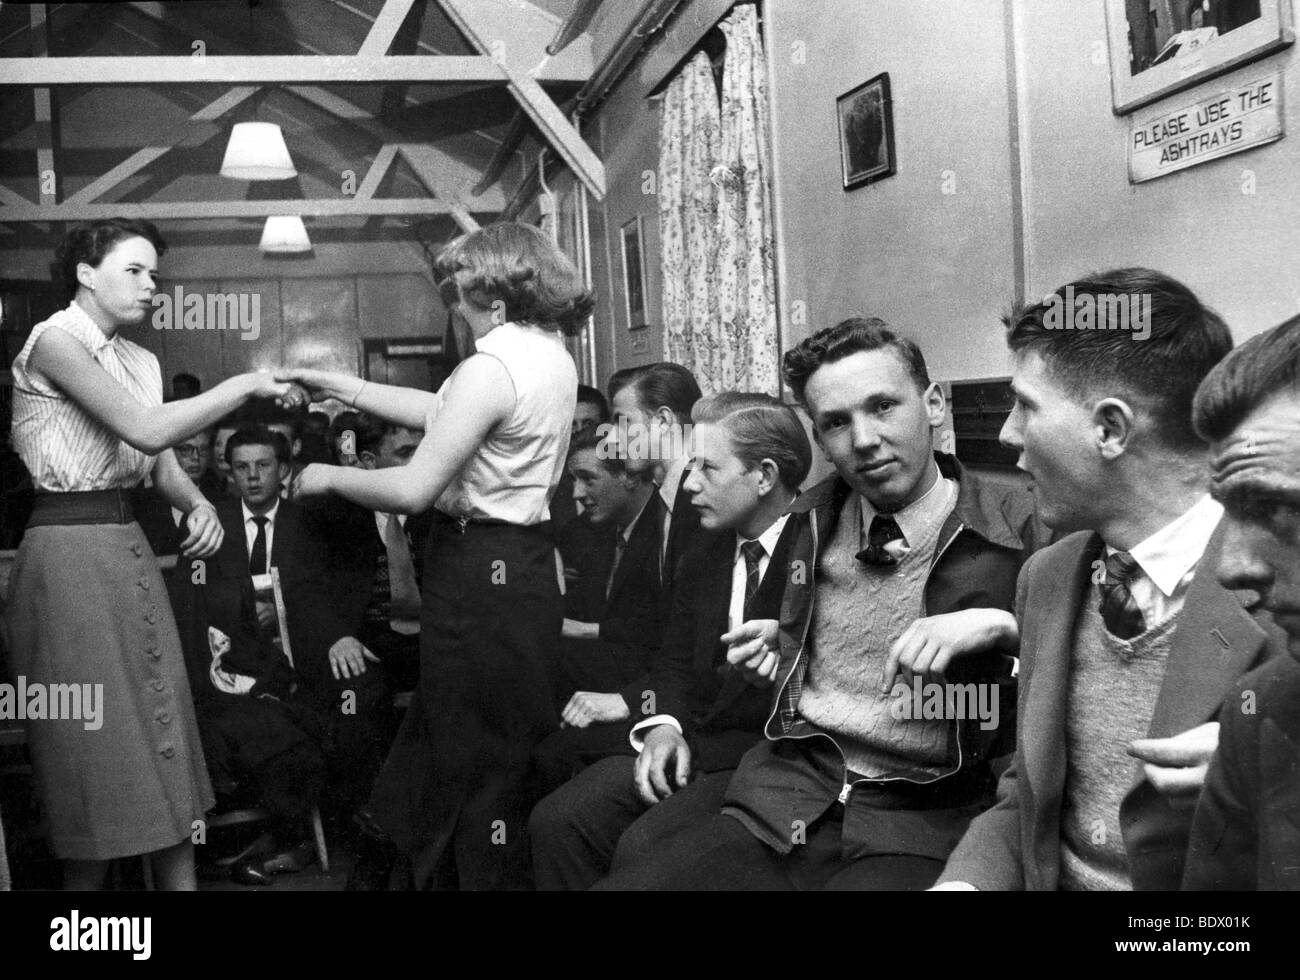 SOUTH LONDON teenage dance club in 1957 Stock Photo